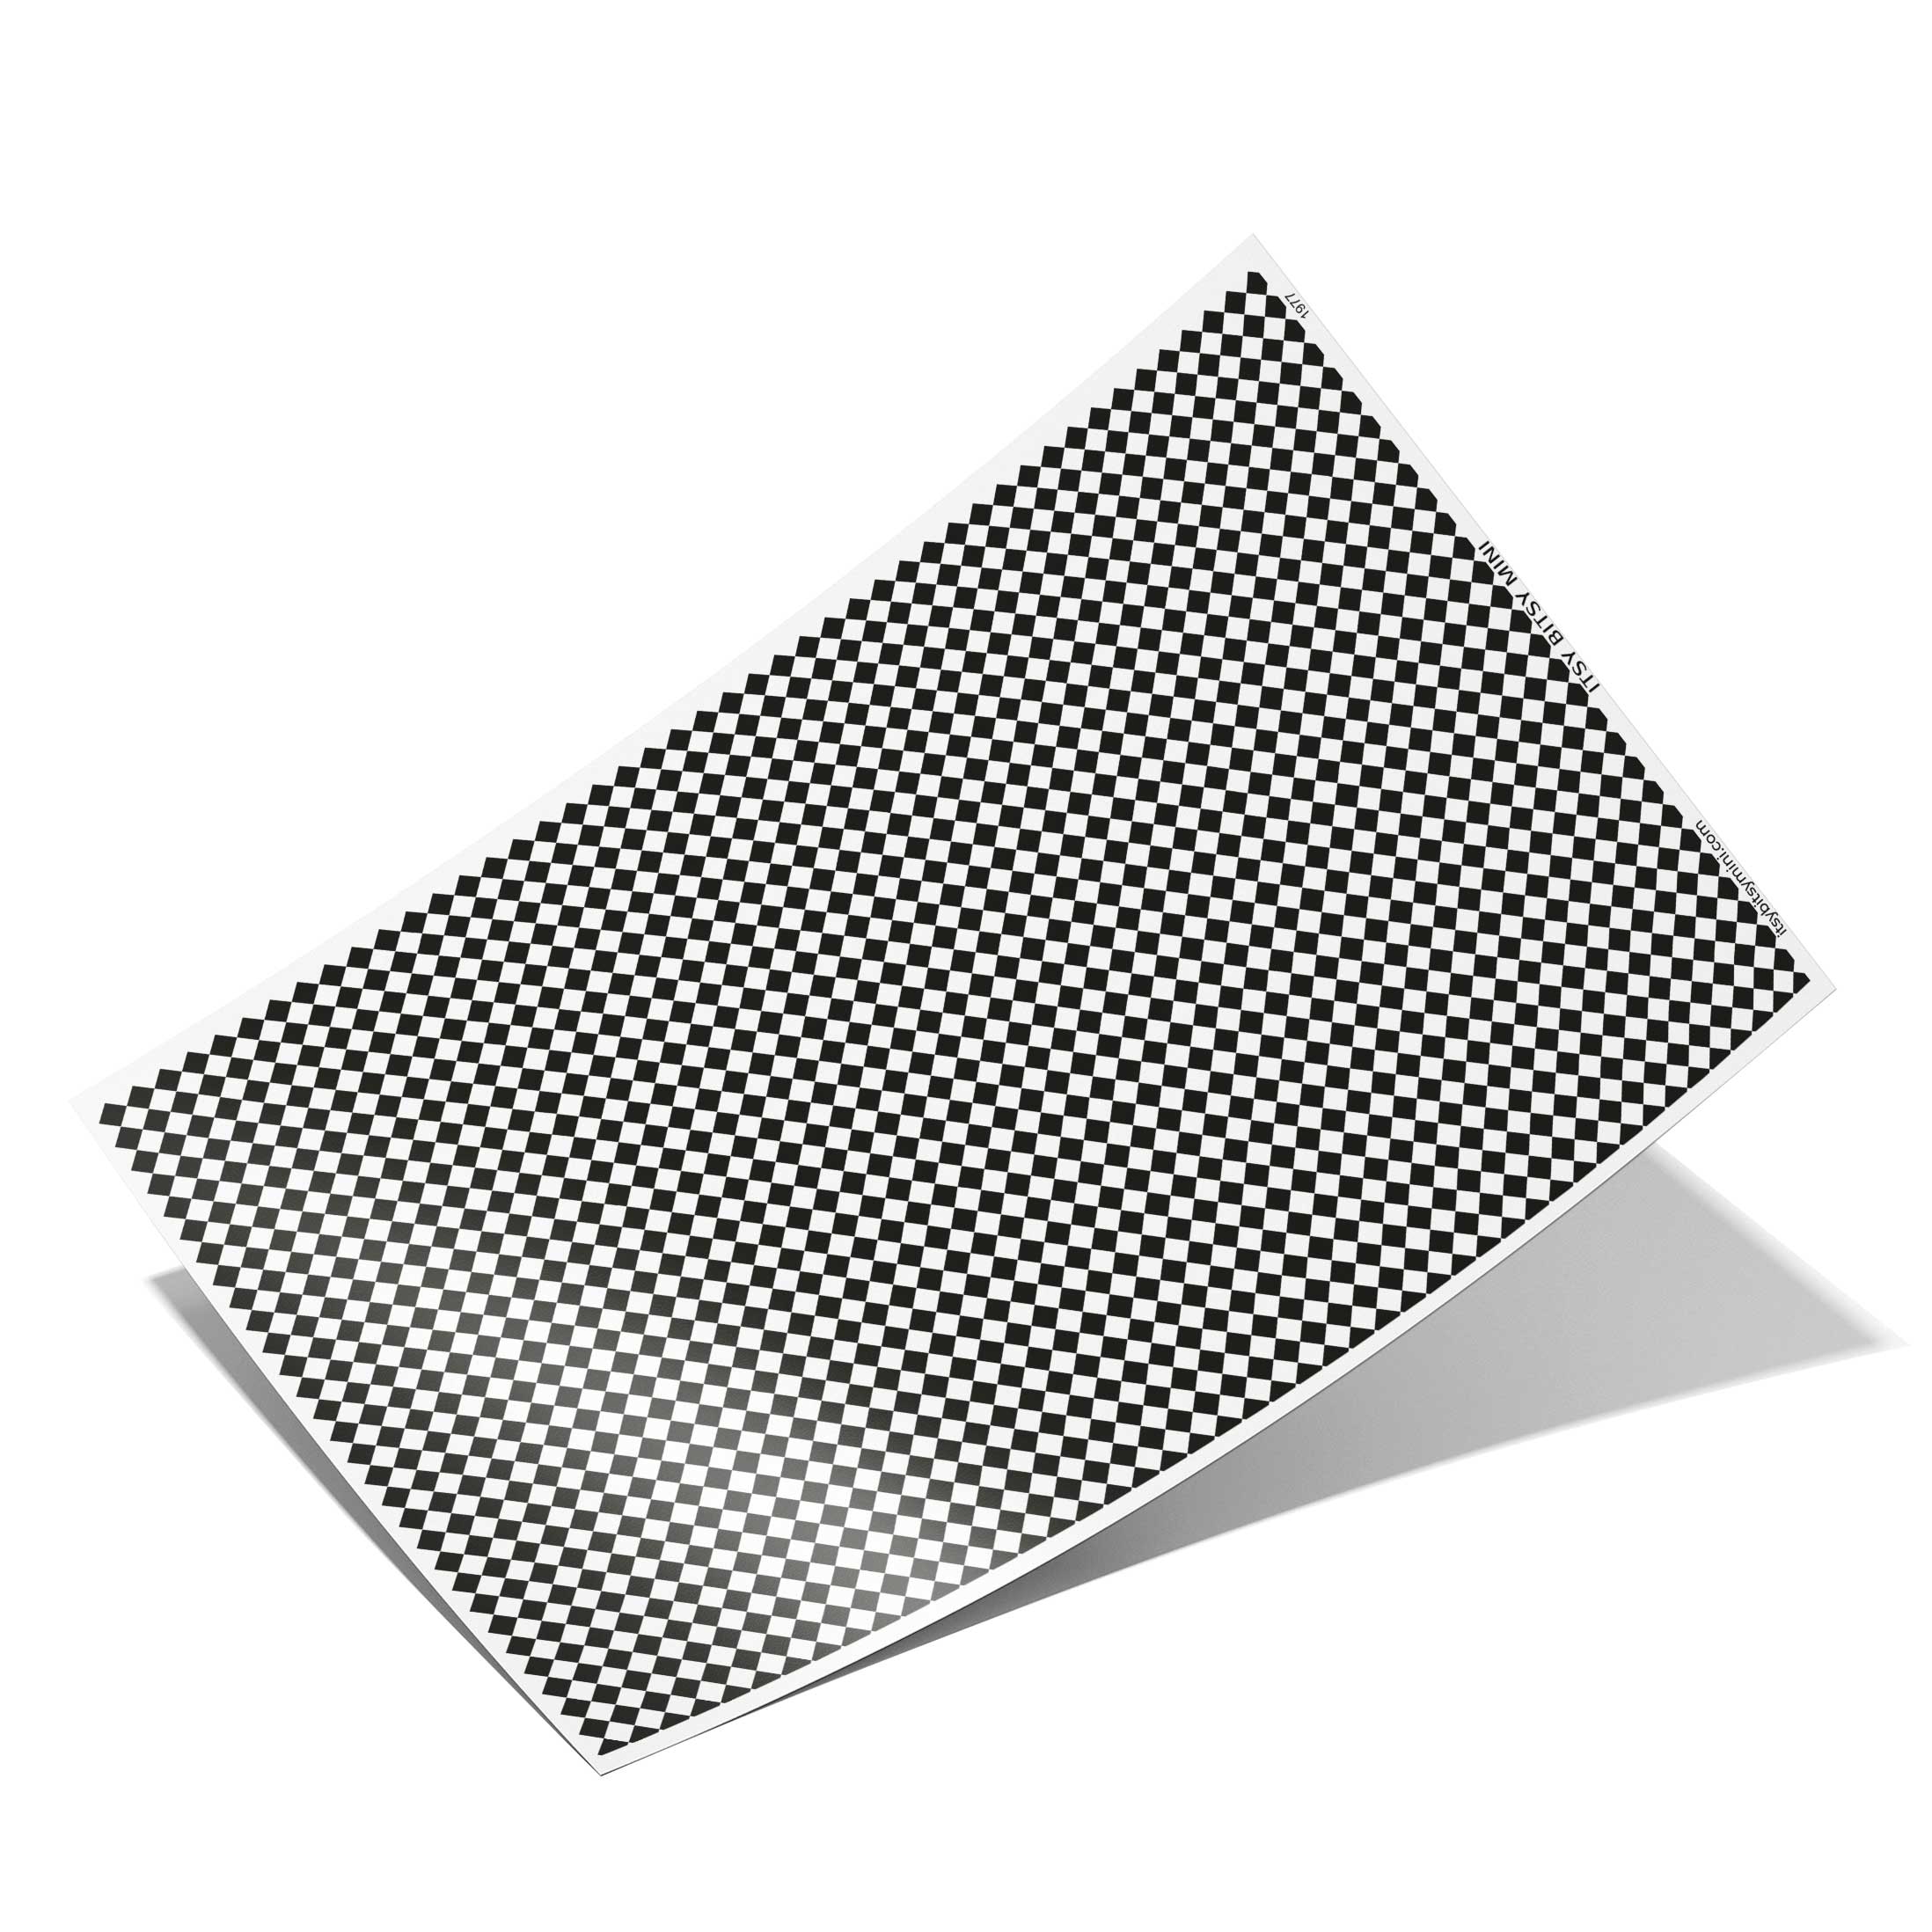 Black and White Diamond Tile - XSmall - Dollhouse Wallpaper